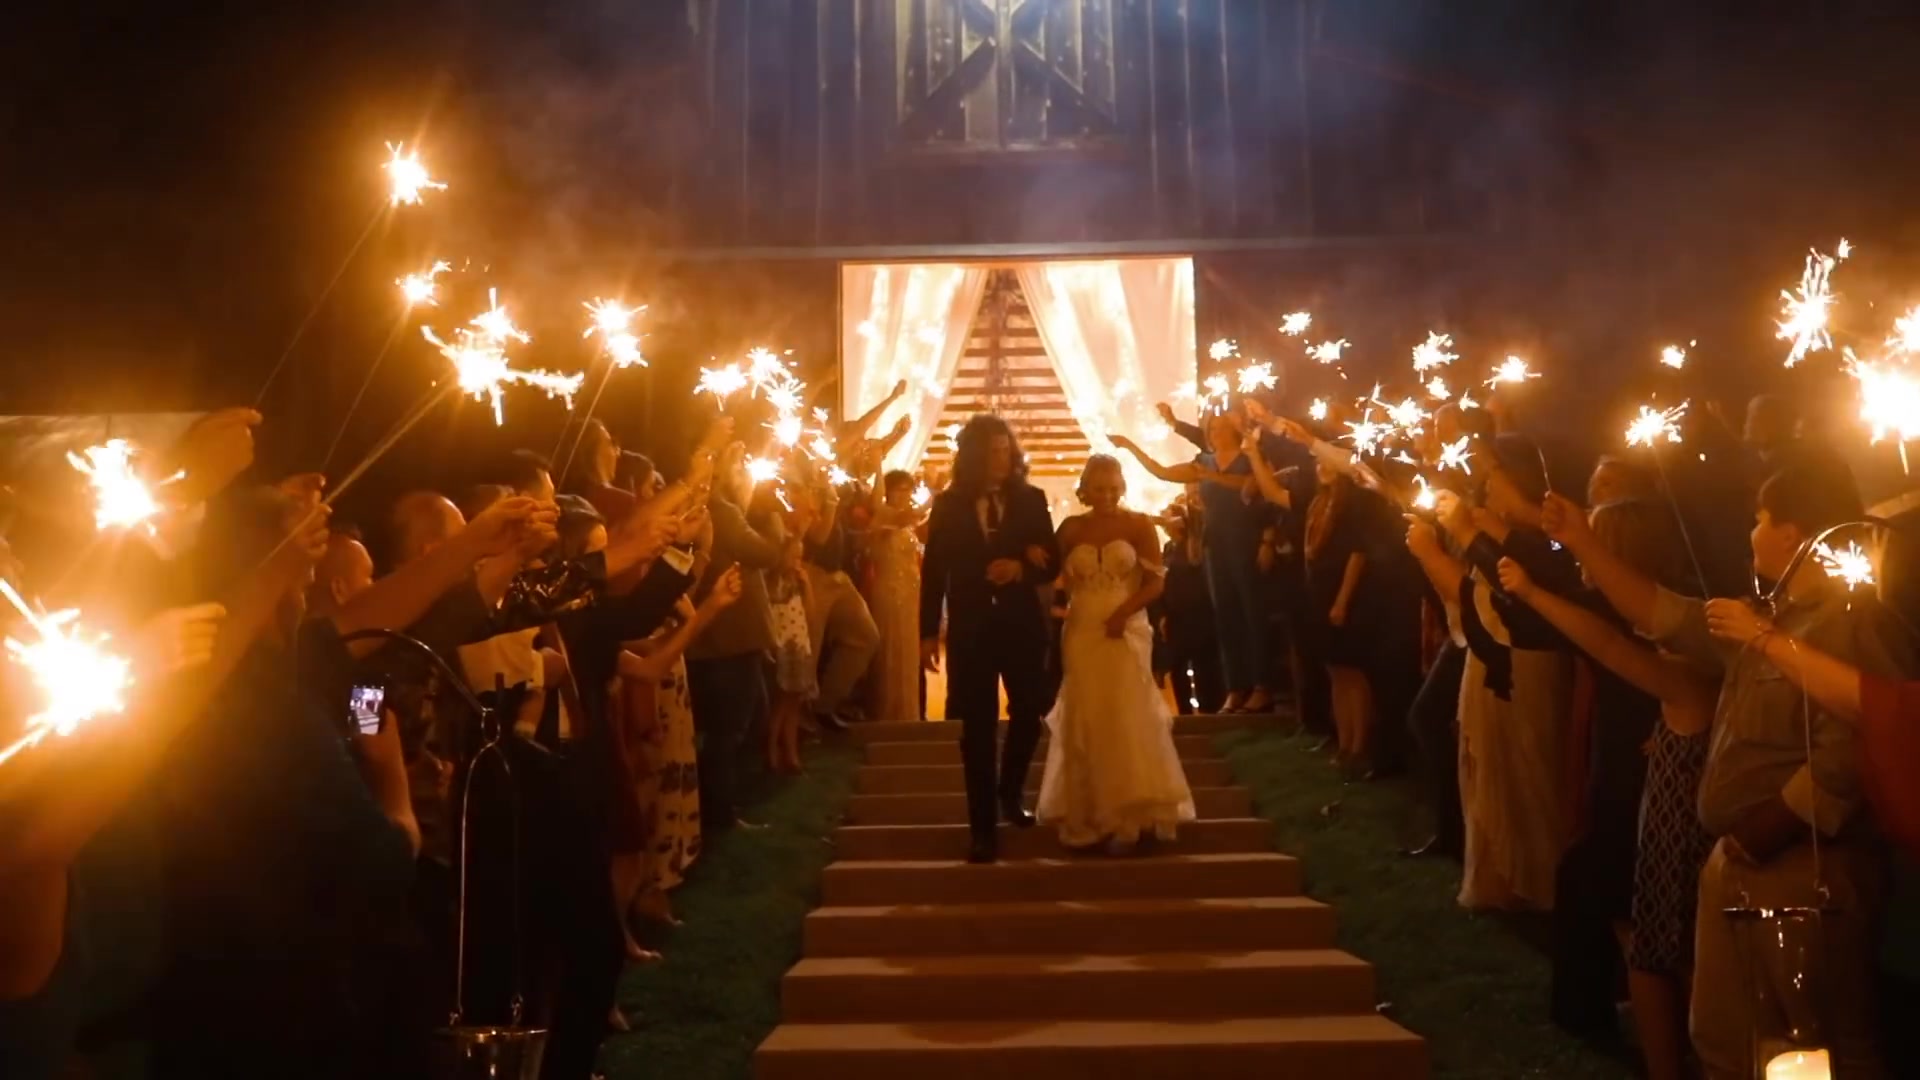 foehner-wedding-video-267.jpg